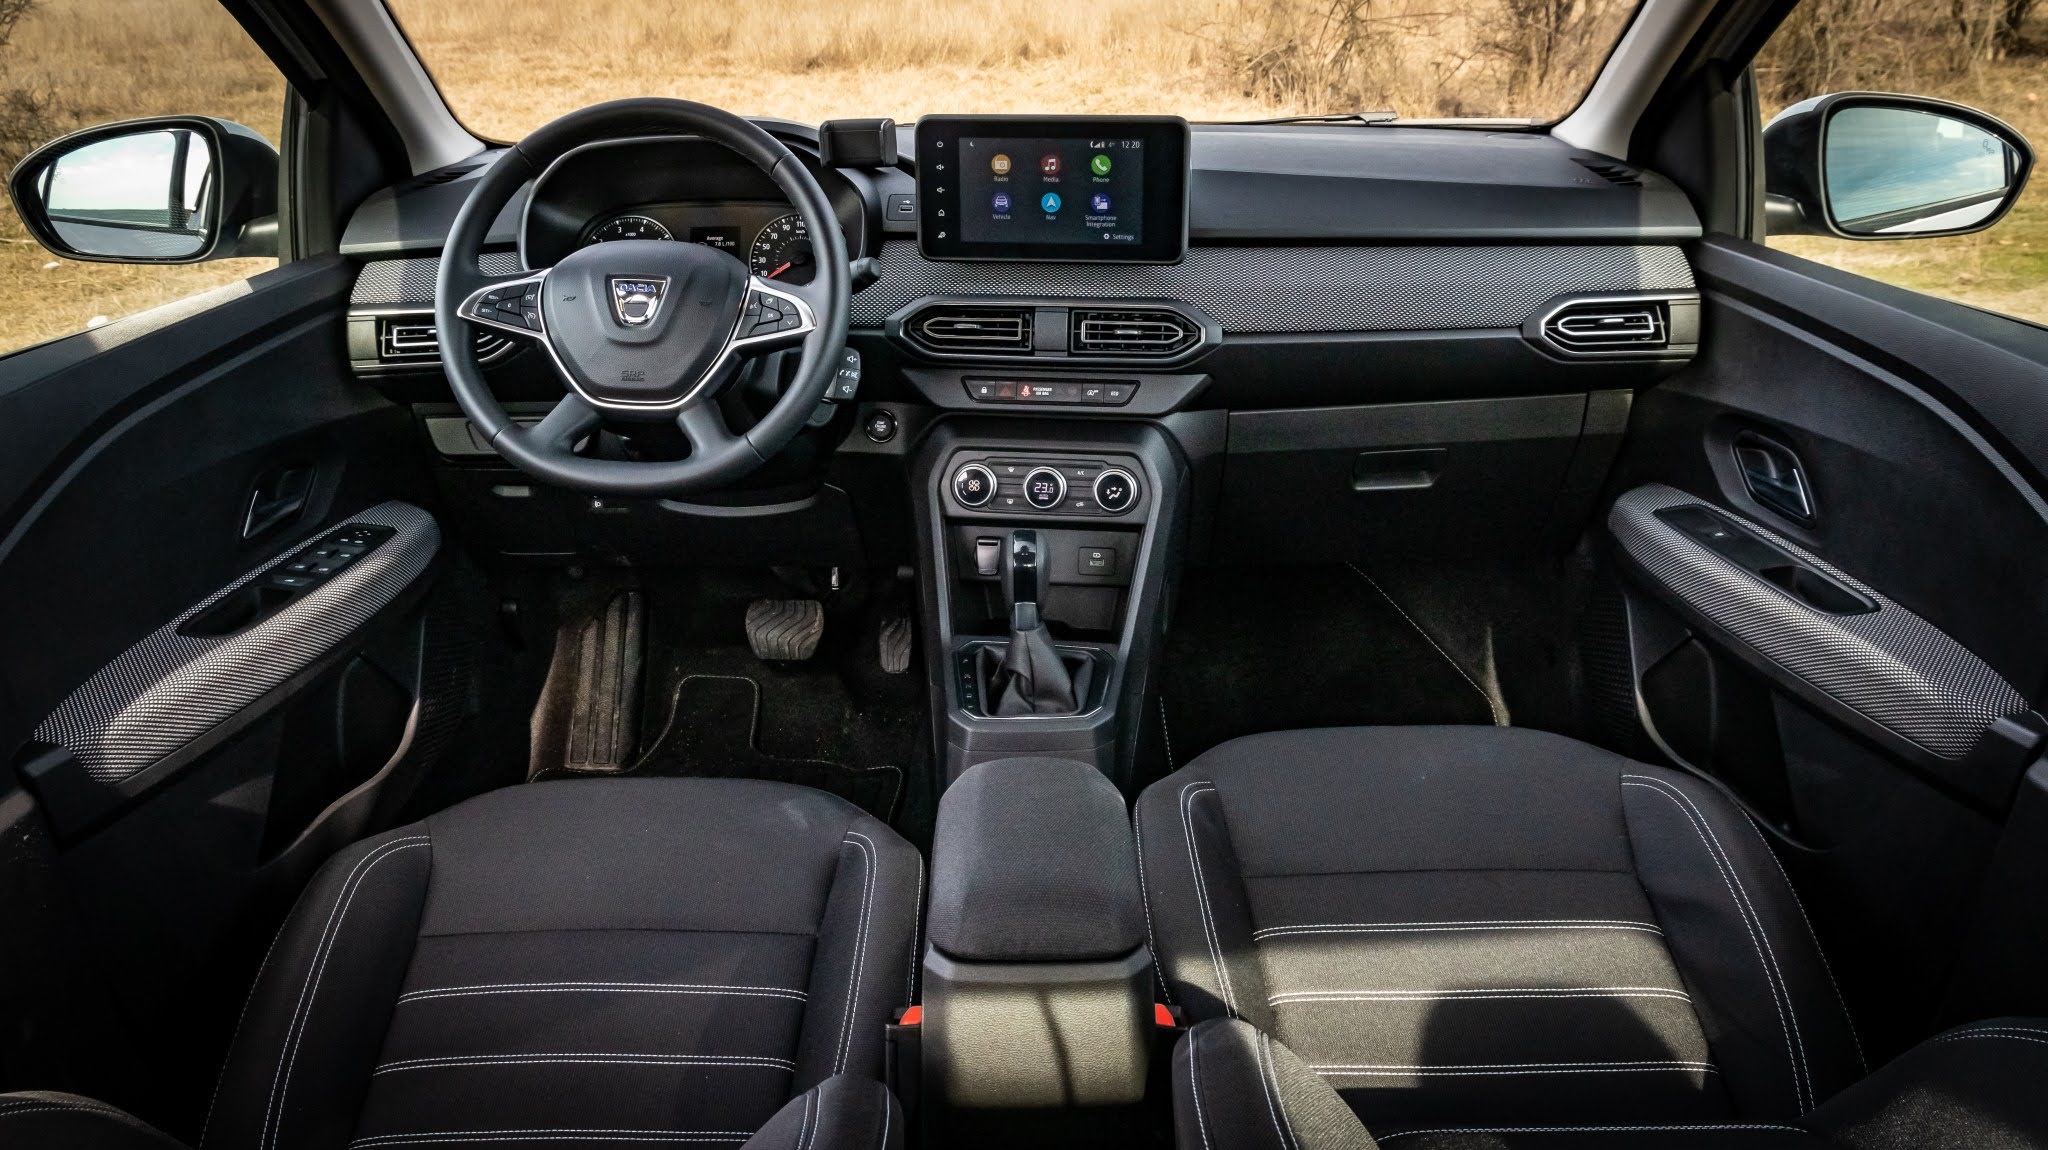 Orphan Roux Children's Palace Dacia Logan 2021 Comfort TCe 90 CVT - review : Gadget.ro – Hi-Tech Lifestyle